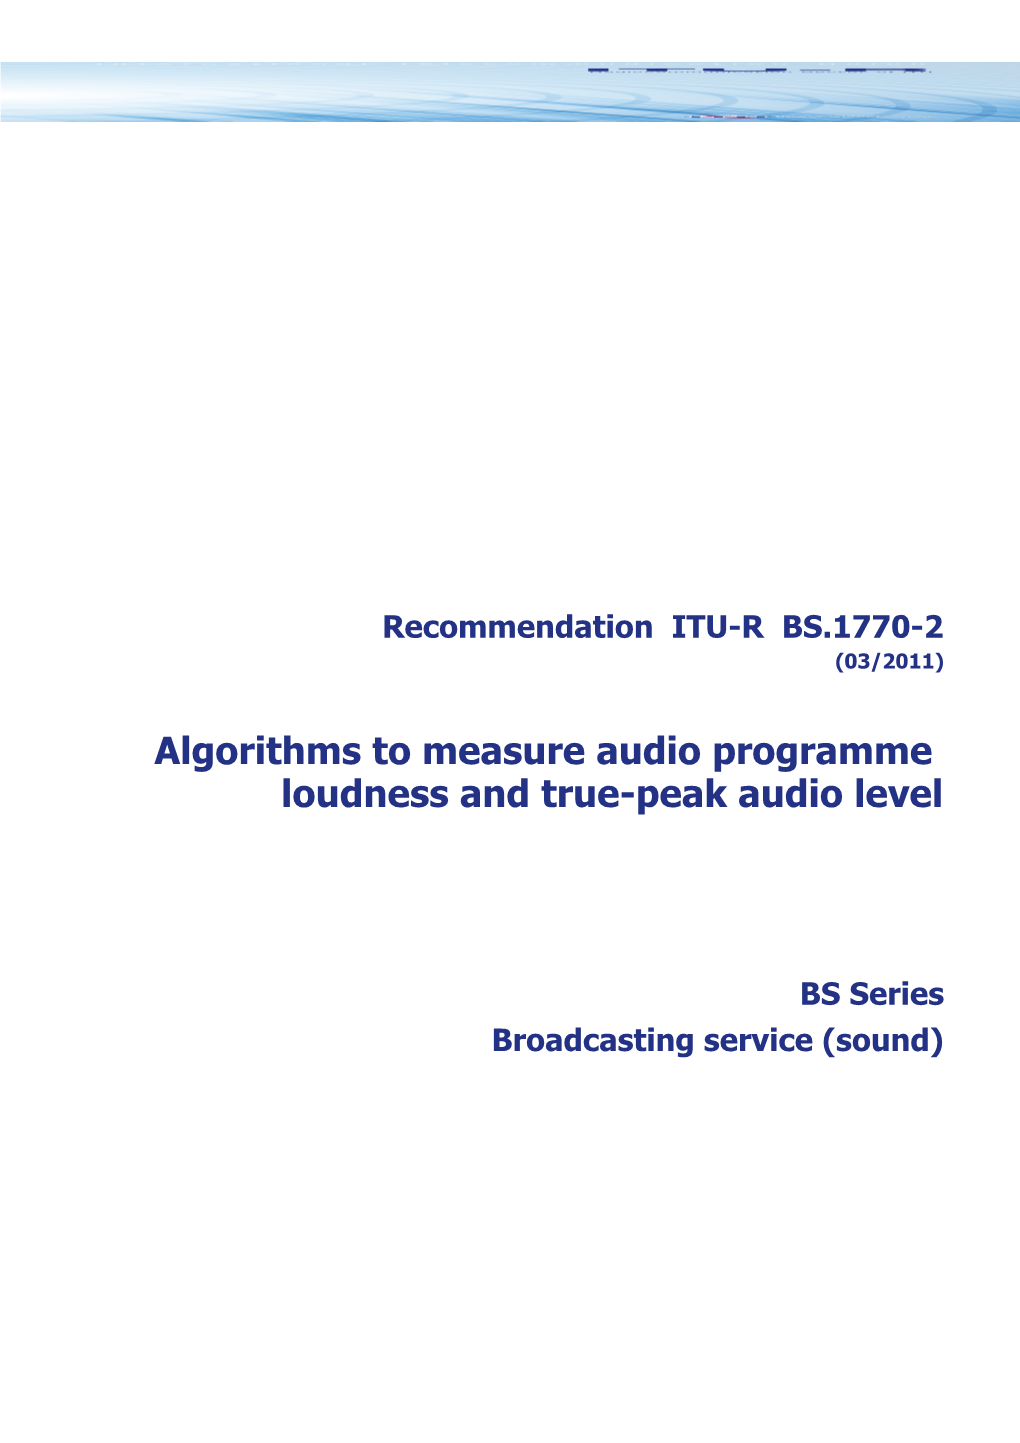 RECOMMENDATION ITU-R BS.1770-2 - Algorithms to Measure Audio Programme Loudness and True-Peak